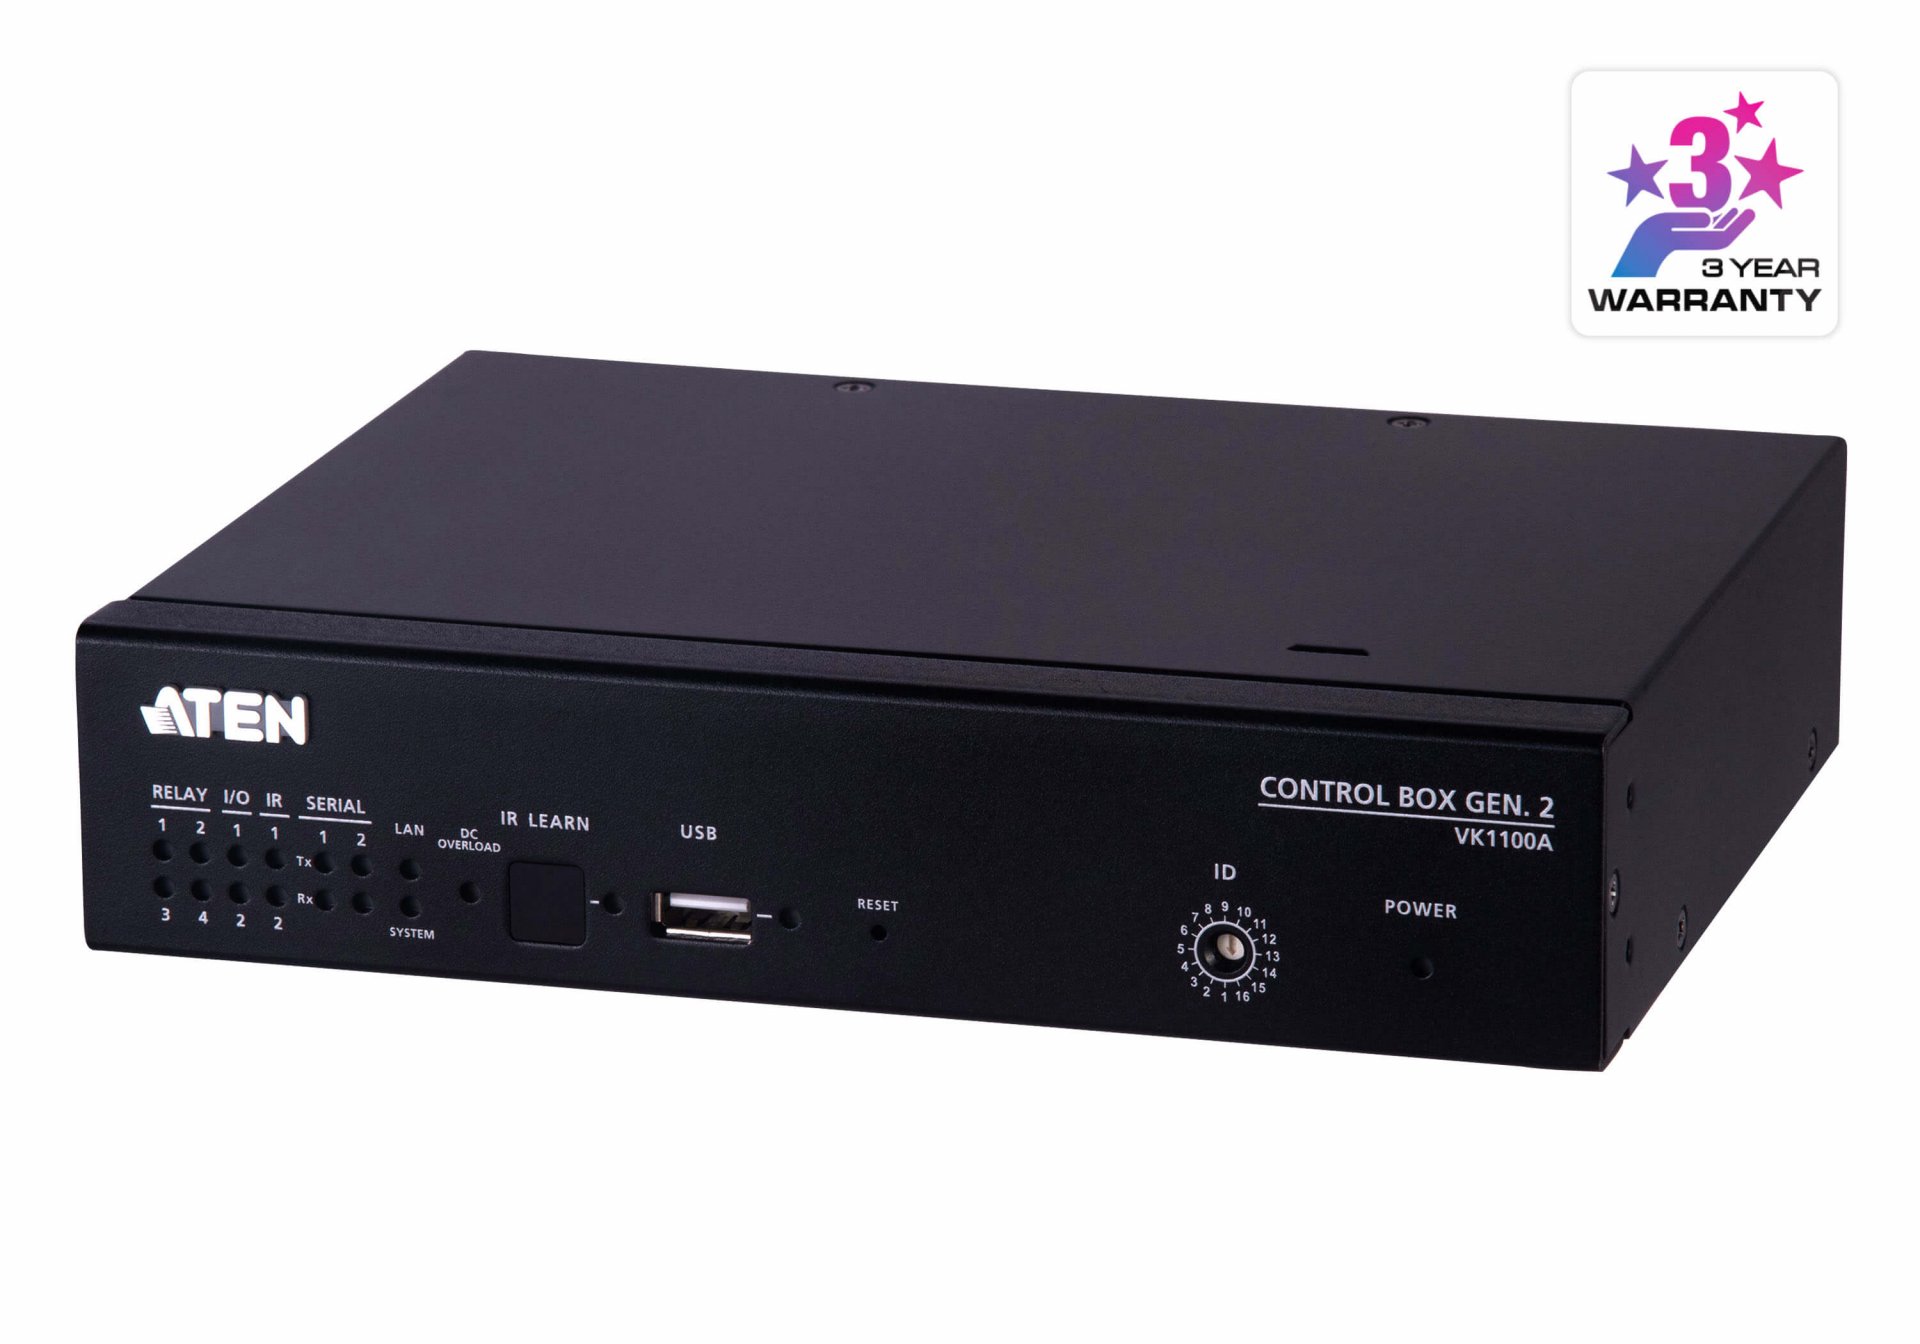 VK1100A : ATEN Control System - Compact Control Box Gen. 2